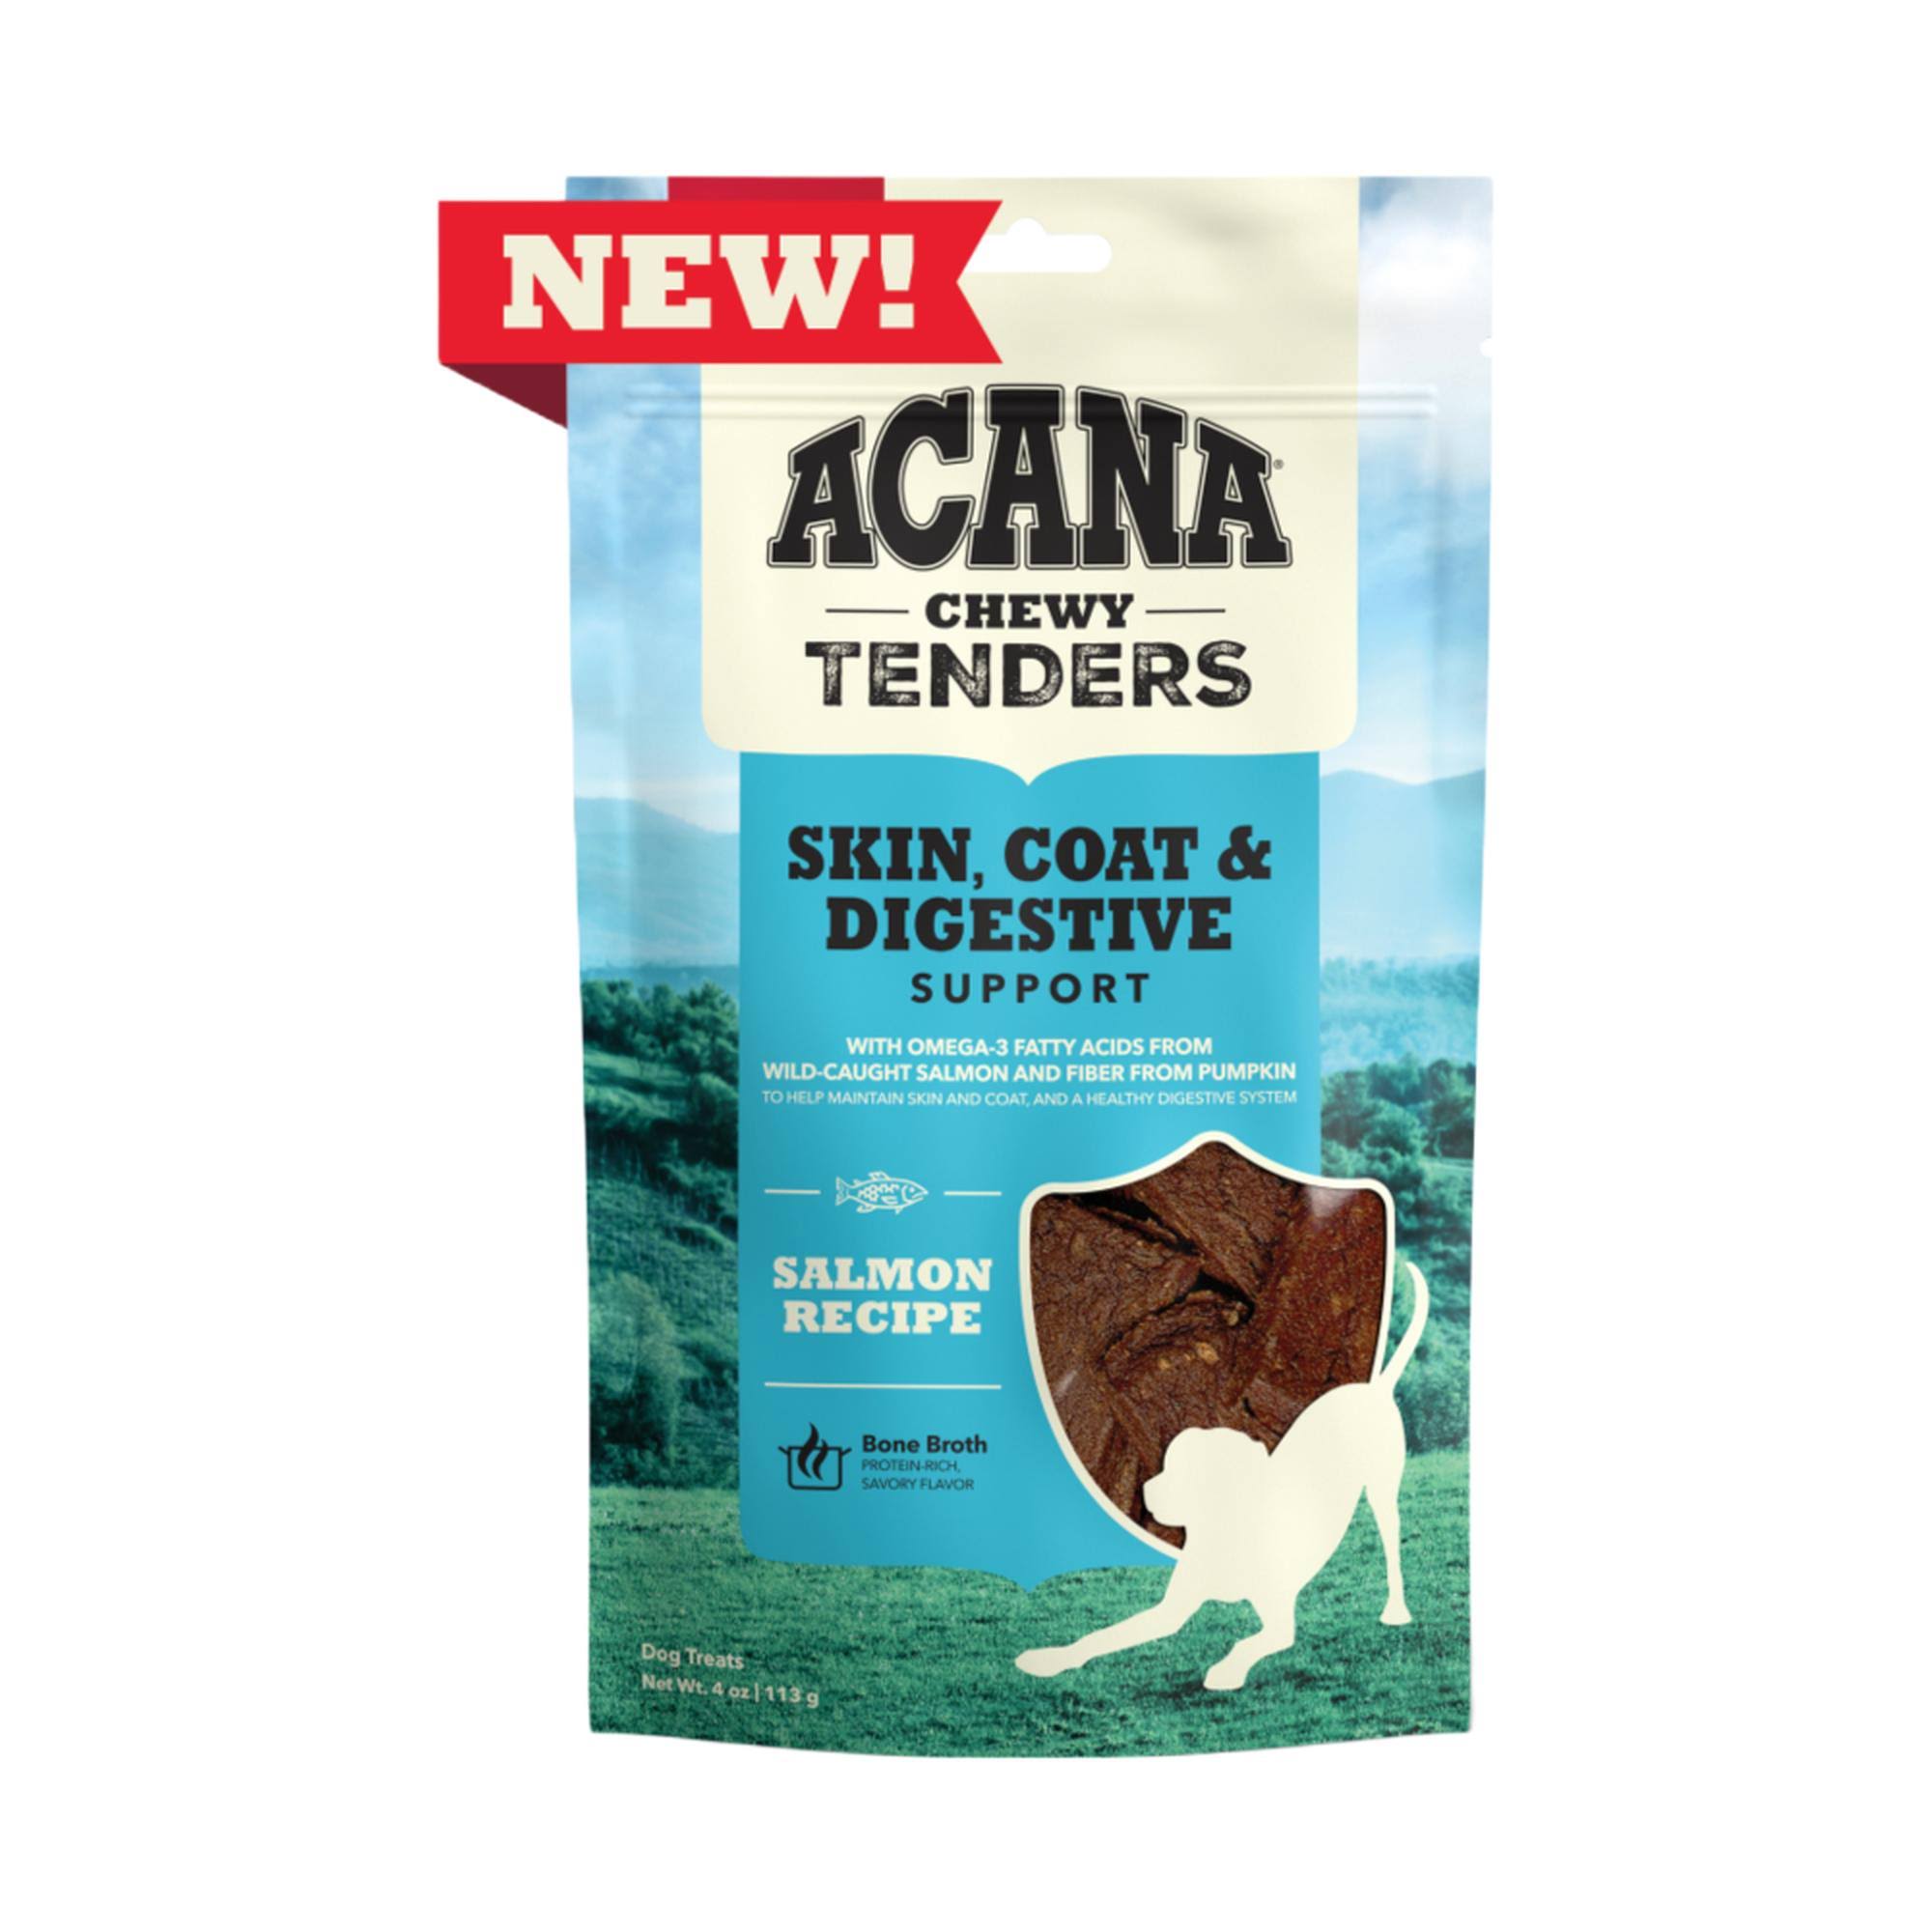 Acana Chewy Tenders Dog Treats Salmon / Skin, Coat & Digestive Support